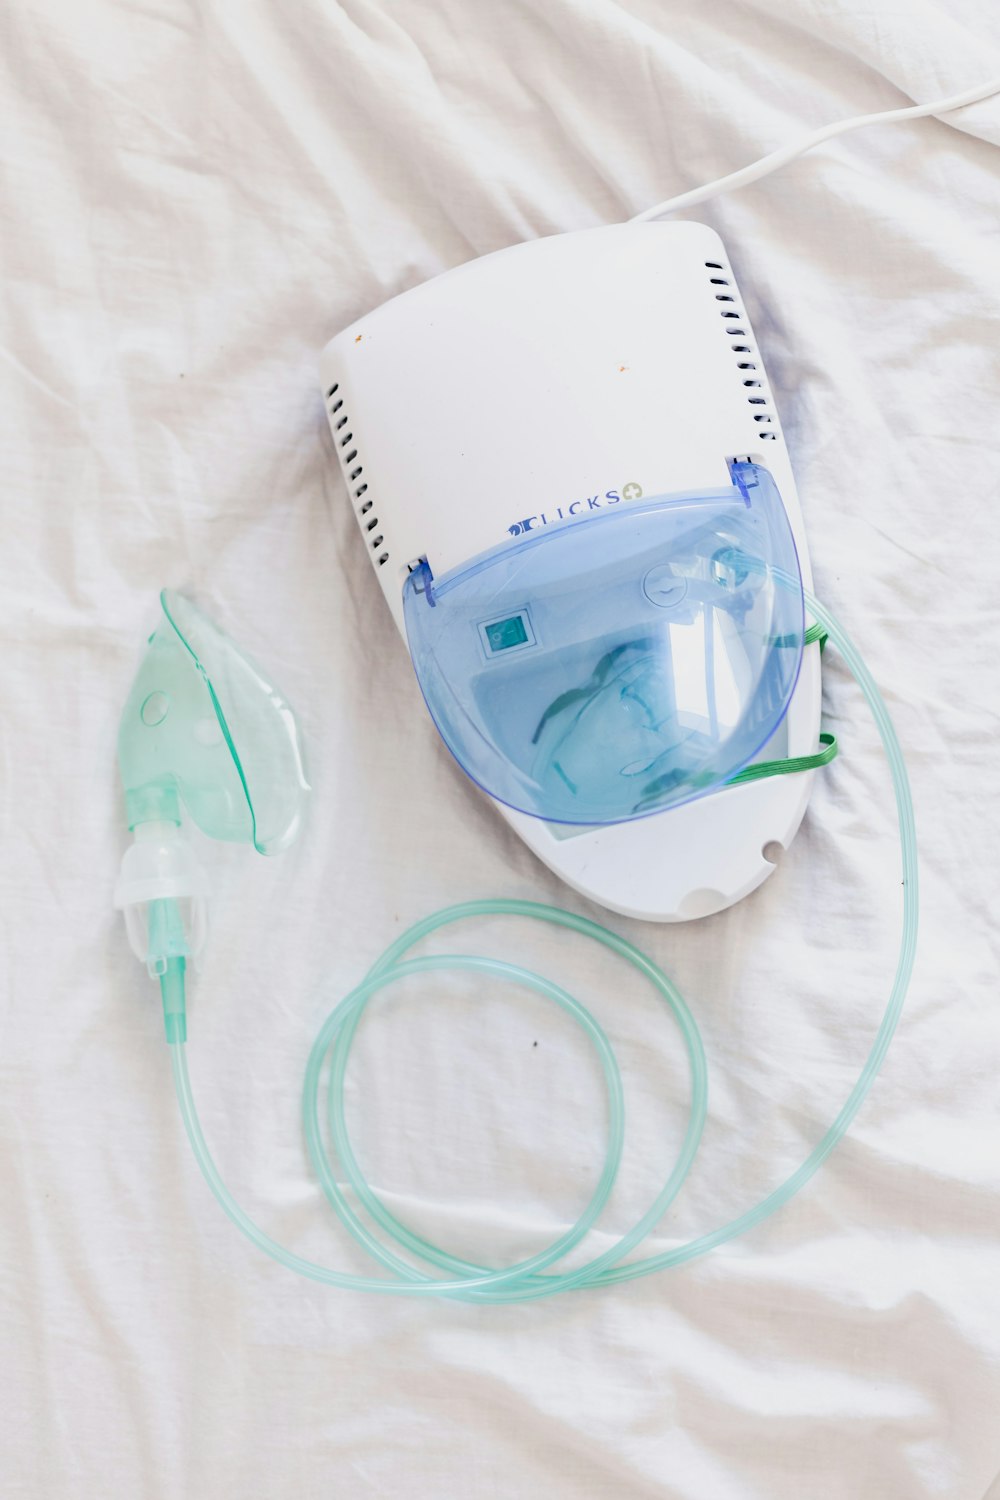 a ventilator and oxygen inhaler on a bed